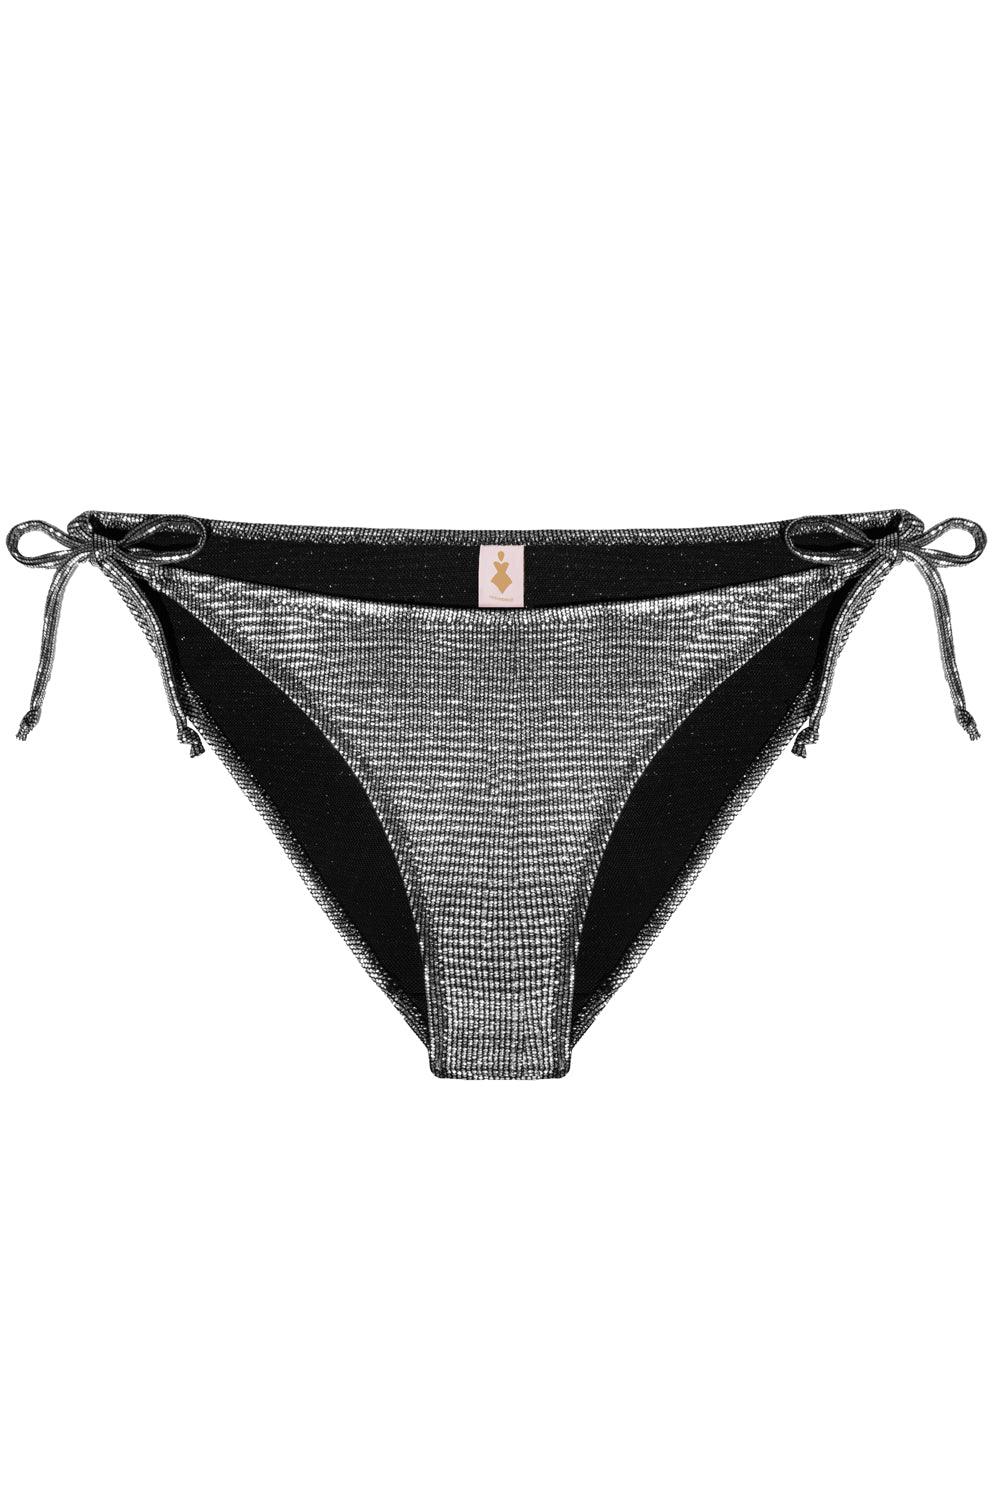 Cressida Silver bikini bottom - Bikini bottom by yesUndress. Shop on yesUndress